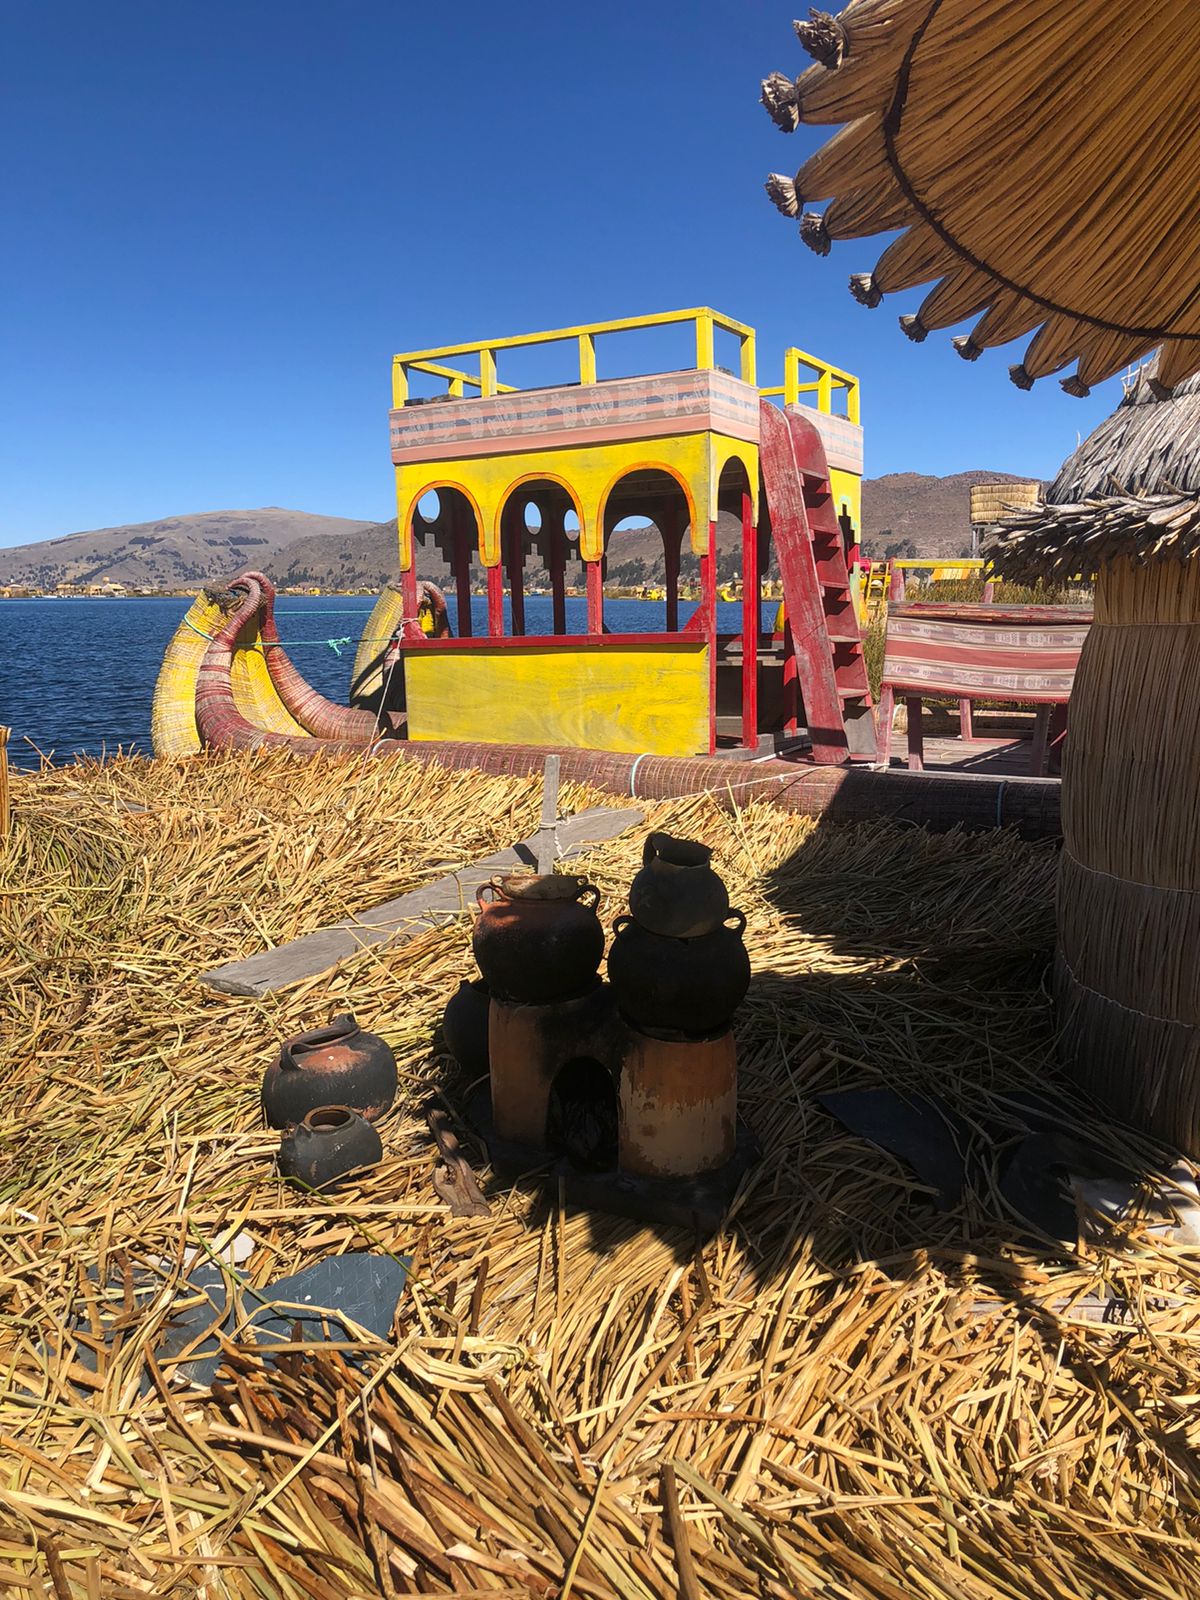 El lago Titicaca